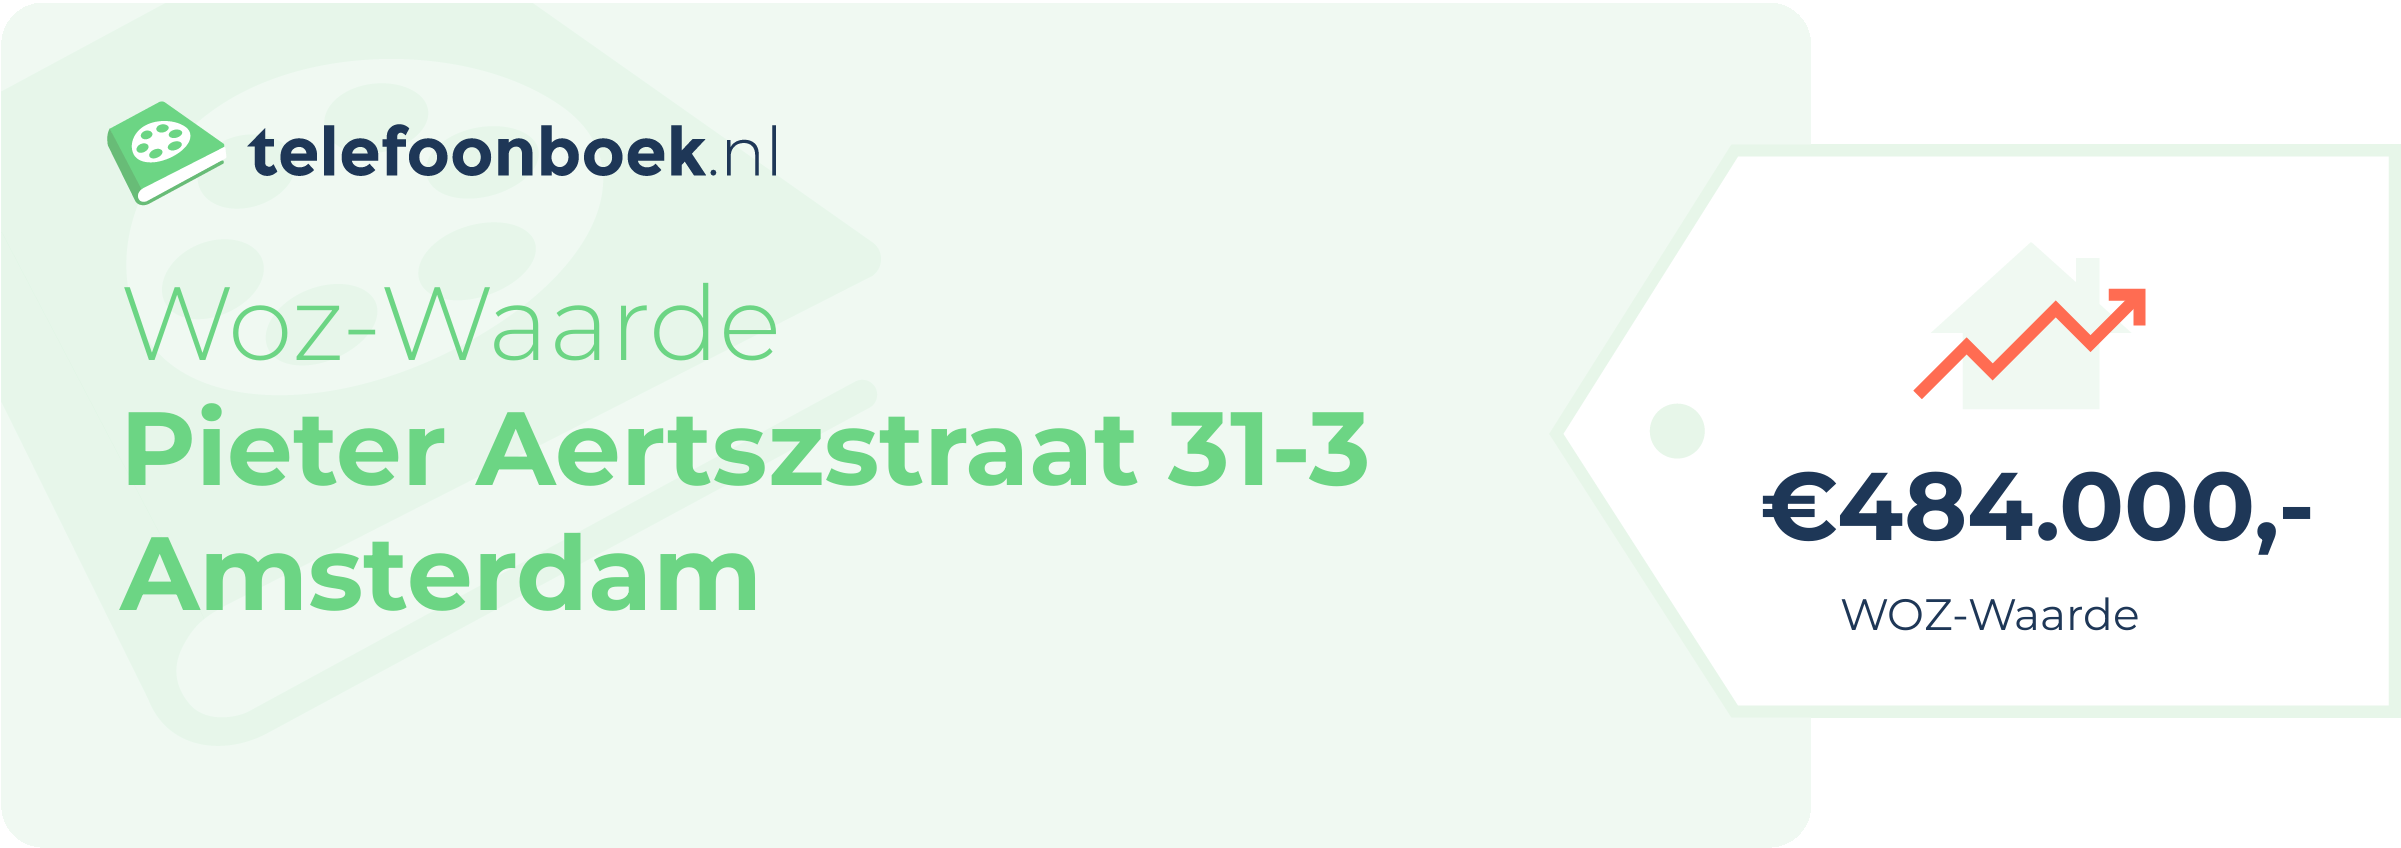 WOZ-waarde Pieter Aertszstraat 31-3 Amsterdam